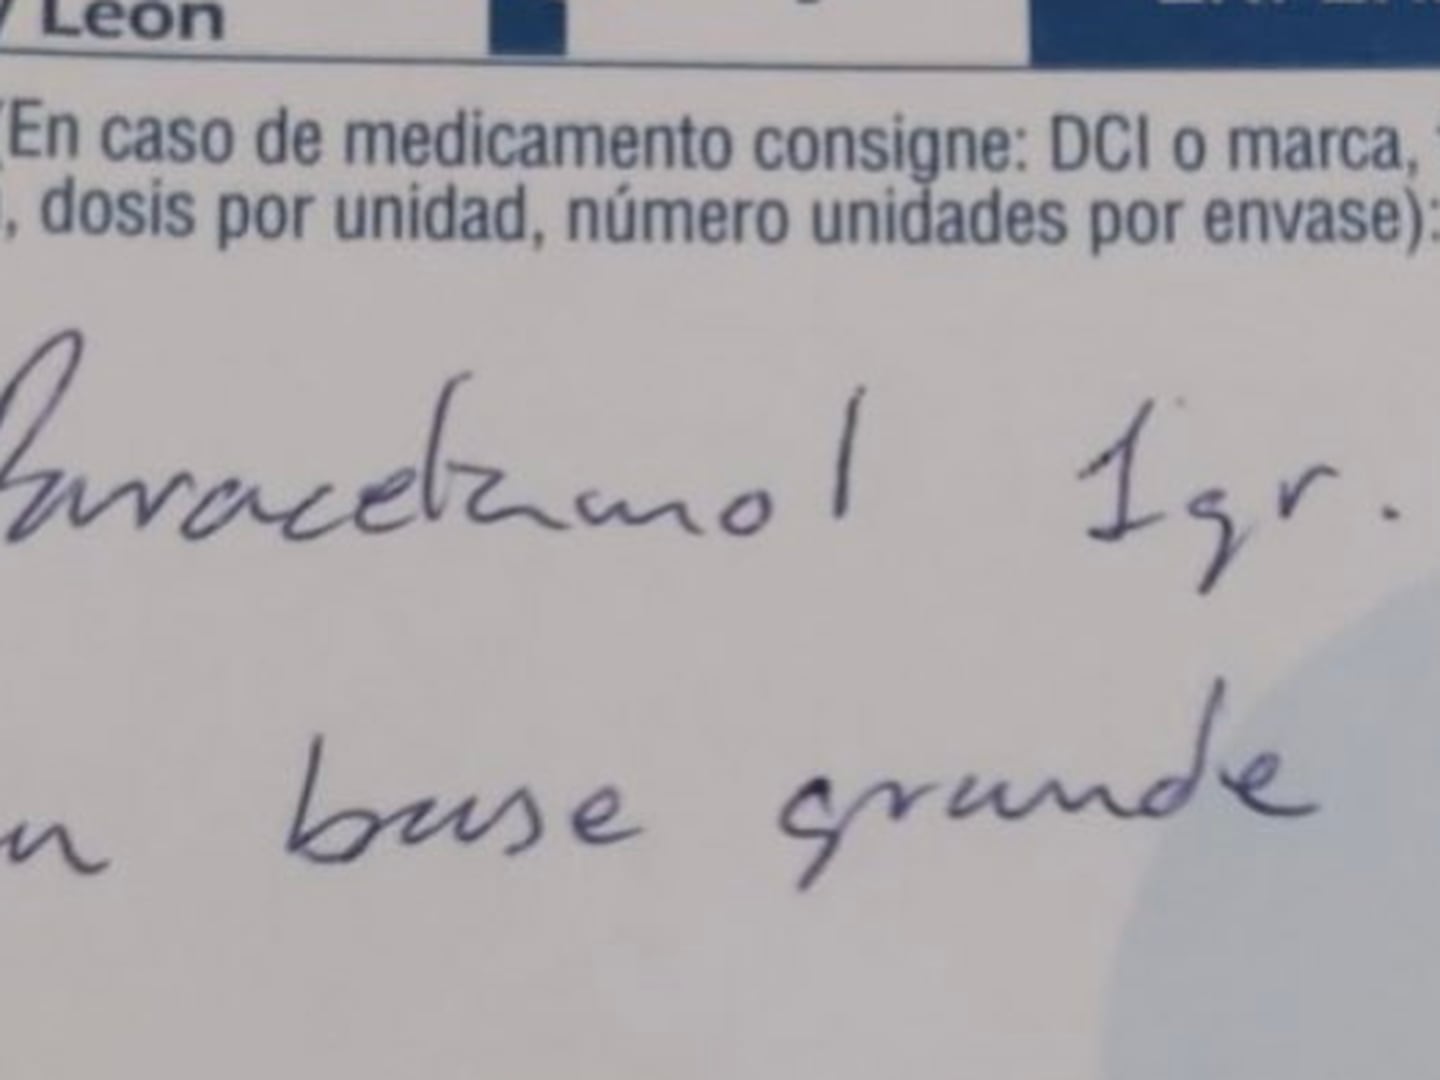 Paracetamol para mis ojos”: Receta médica se hizo viral por garrafal falta  de ortografía – Publimetro Chile